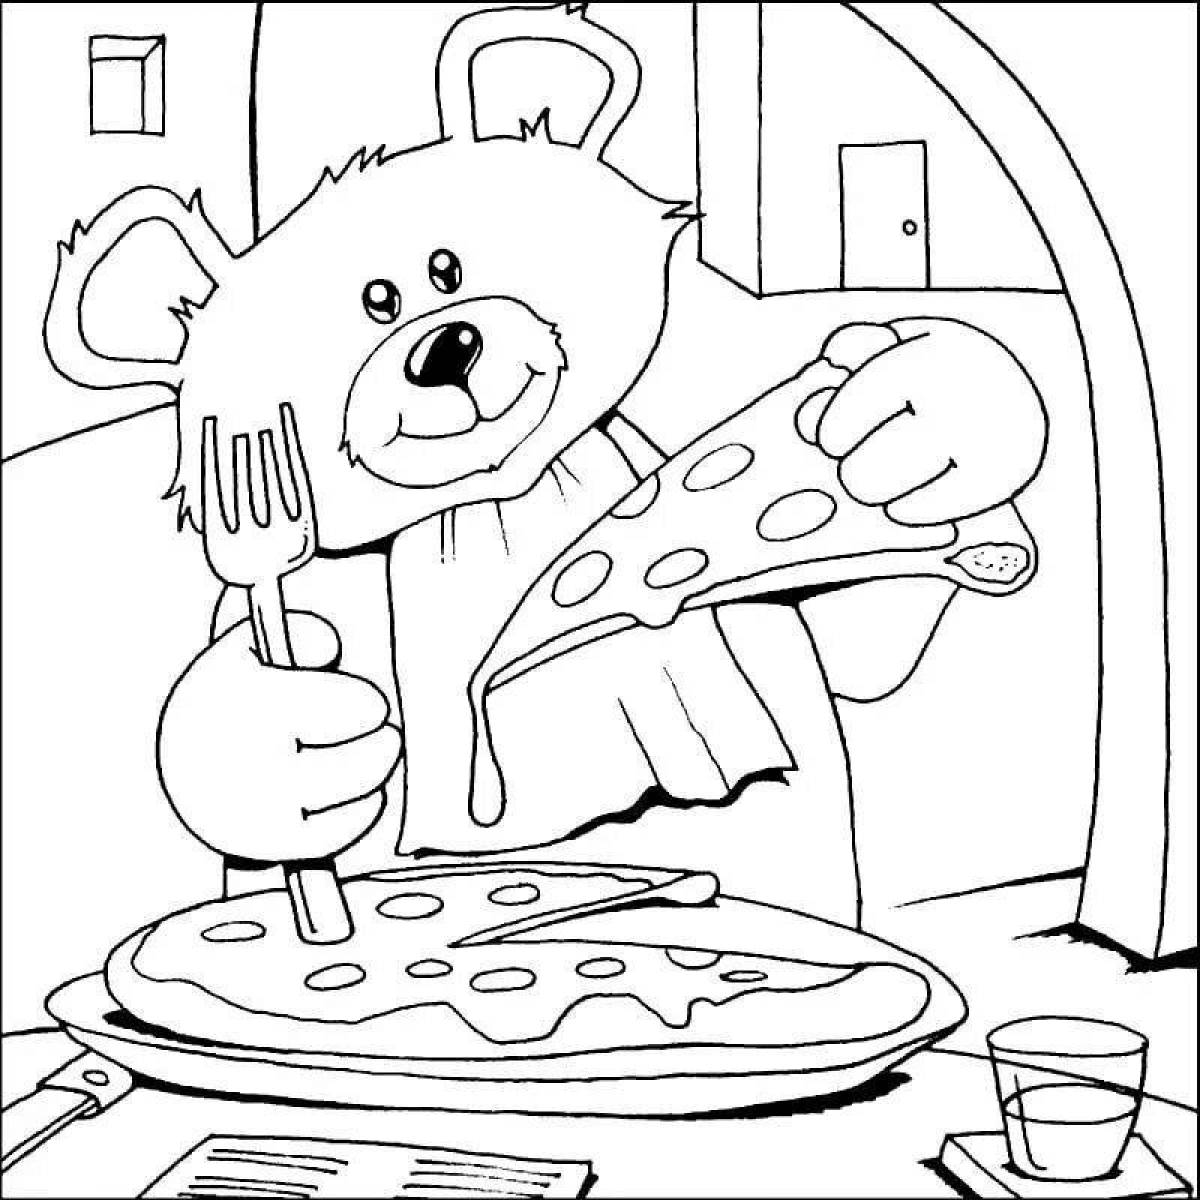 Inviting pizzeria coloring book